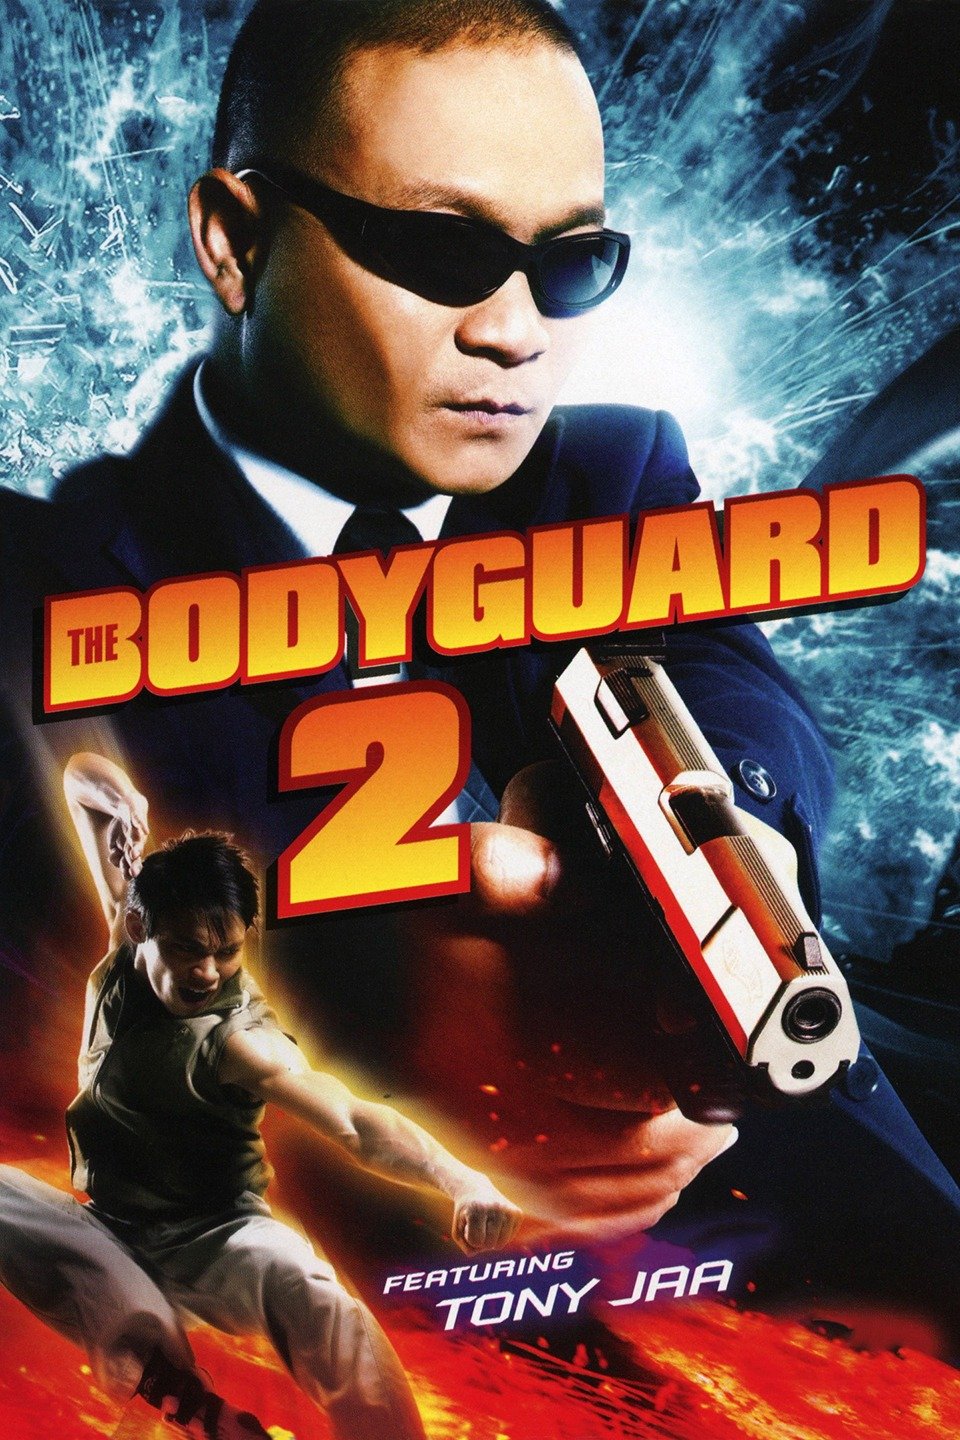 [MINI Super-HQ] The Bodyguard 2 (2007) บอดี้การ์ดหน้าเหลี่ยม ภาค 2 [1080p] [พากย์ไทย 5.1] [บรรยายอังกฤษ] [เสียงไทย + ซับอังกฤษ]